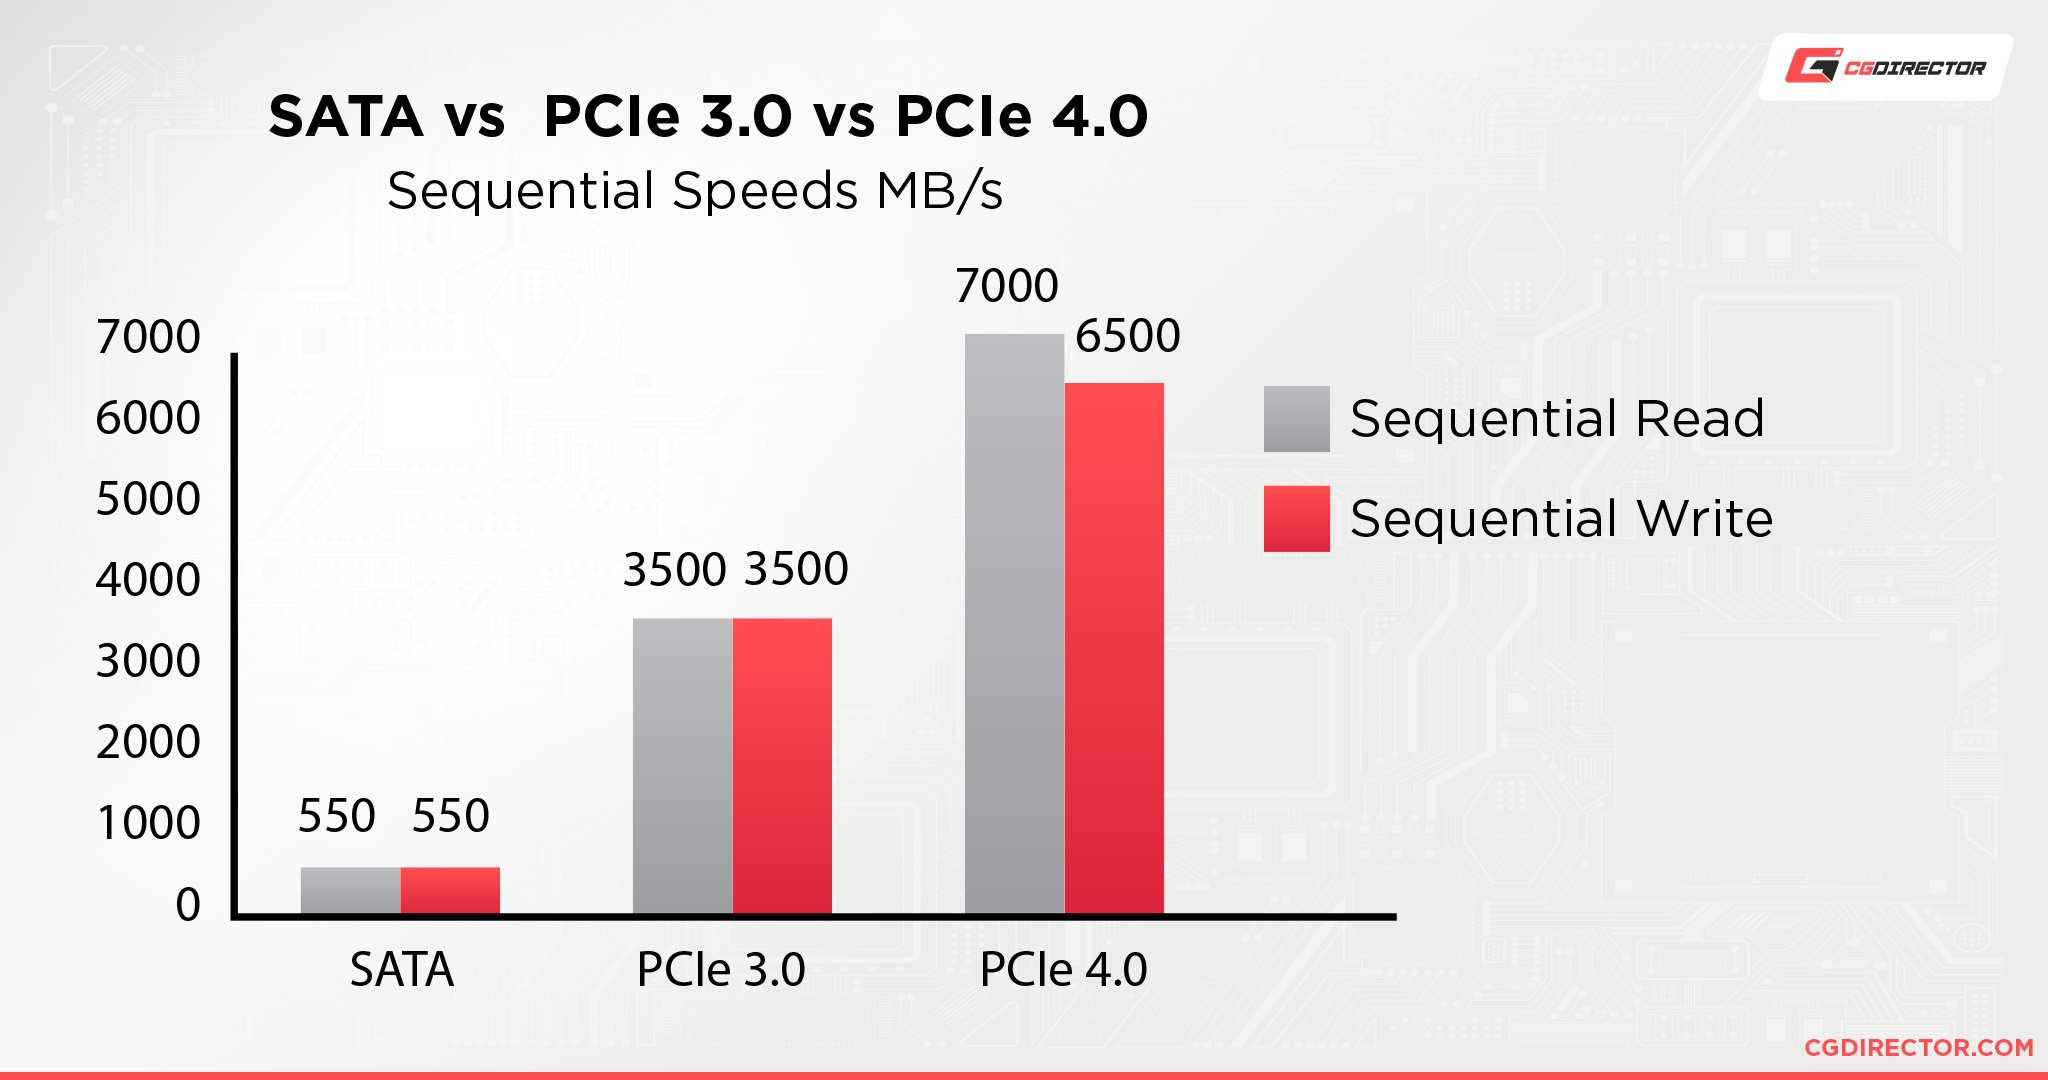 SSD Speed Comparison